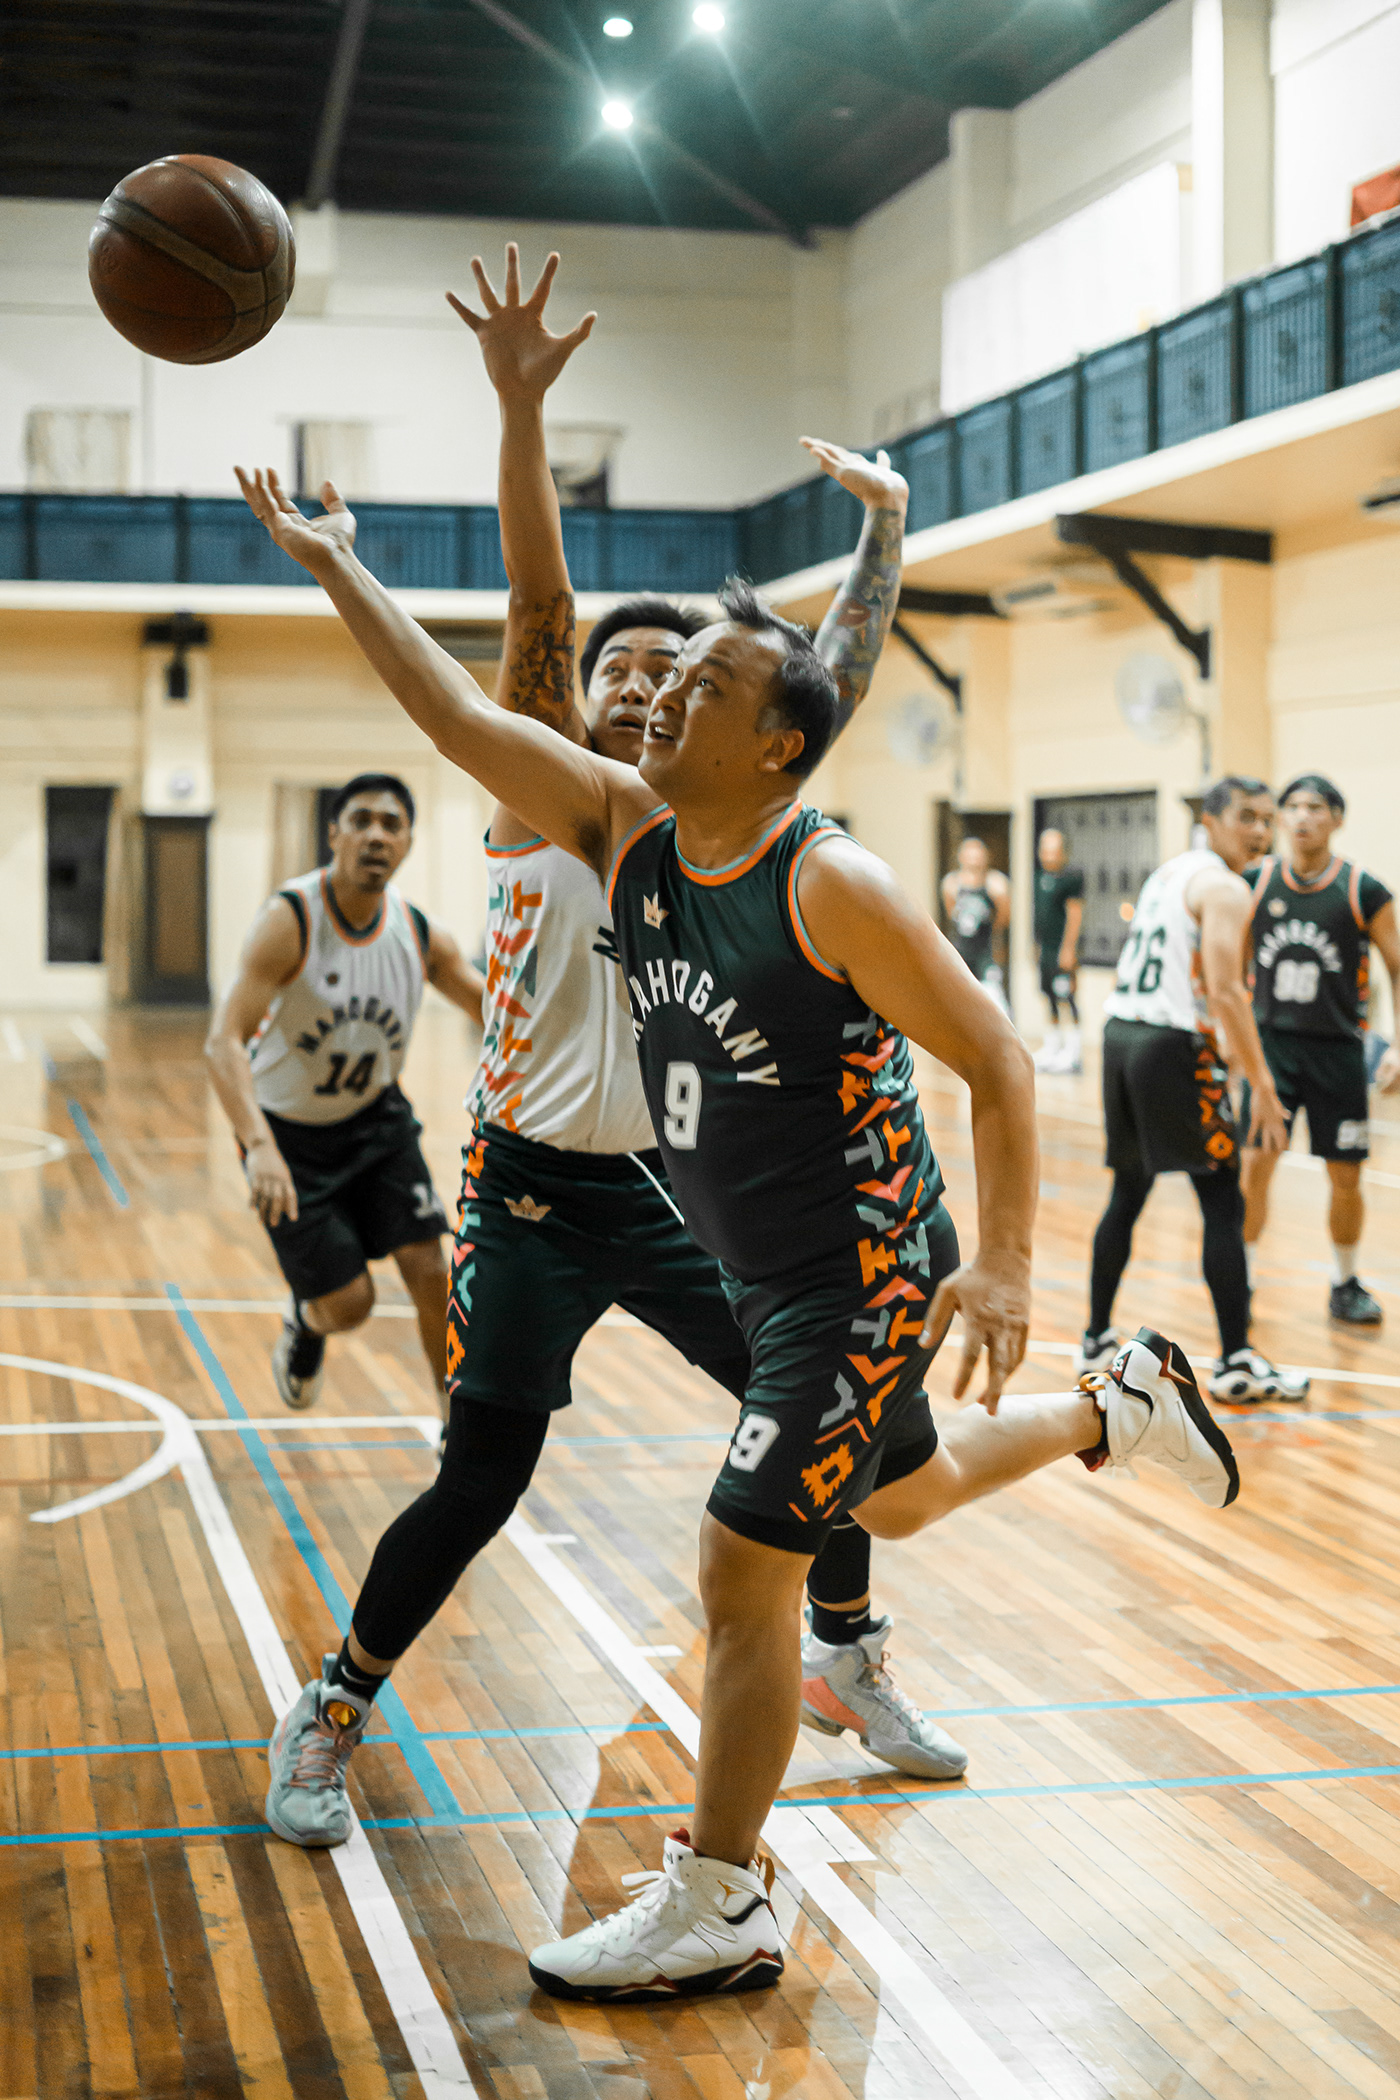 basketball philippines mahogany basketballleague